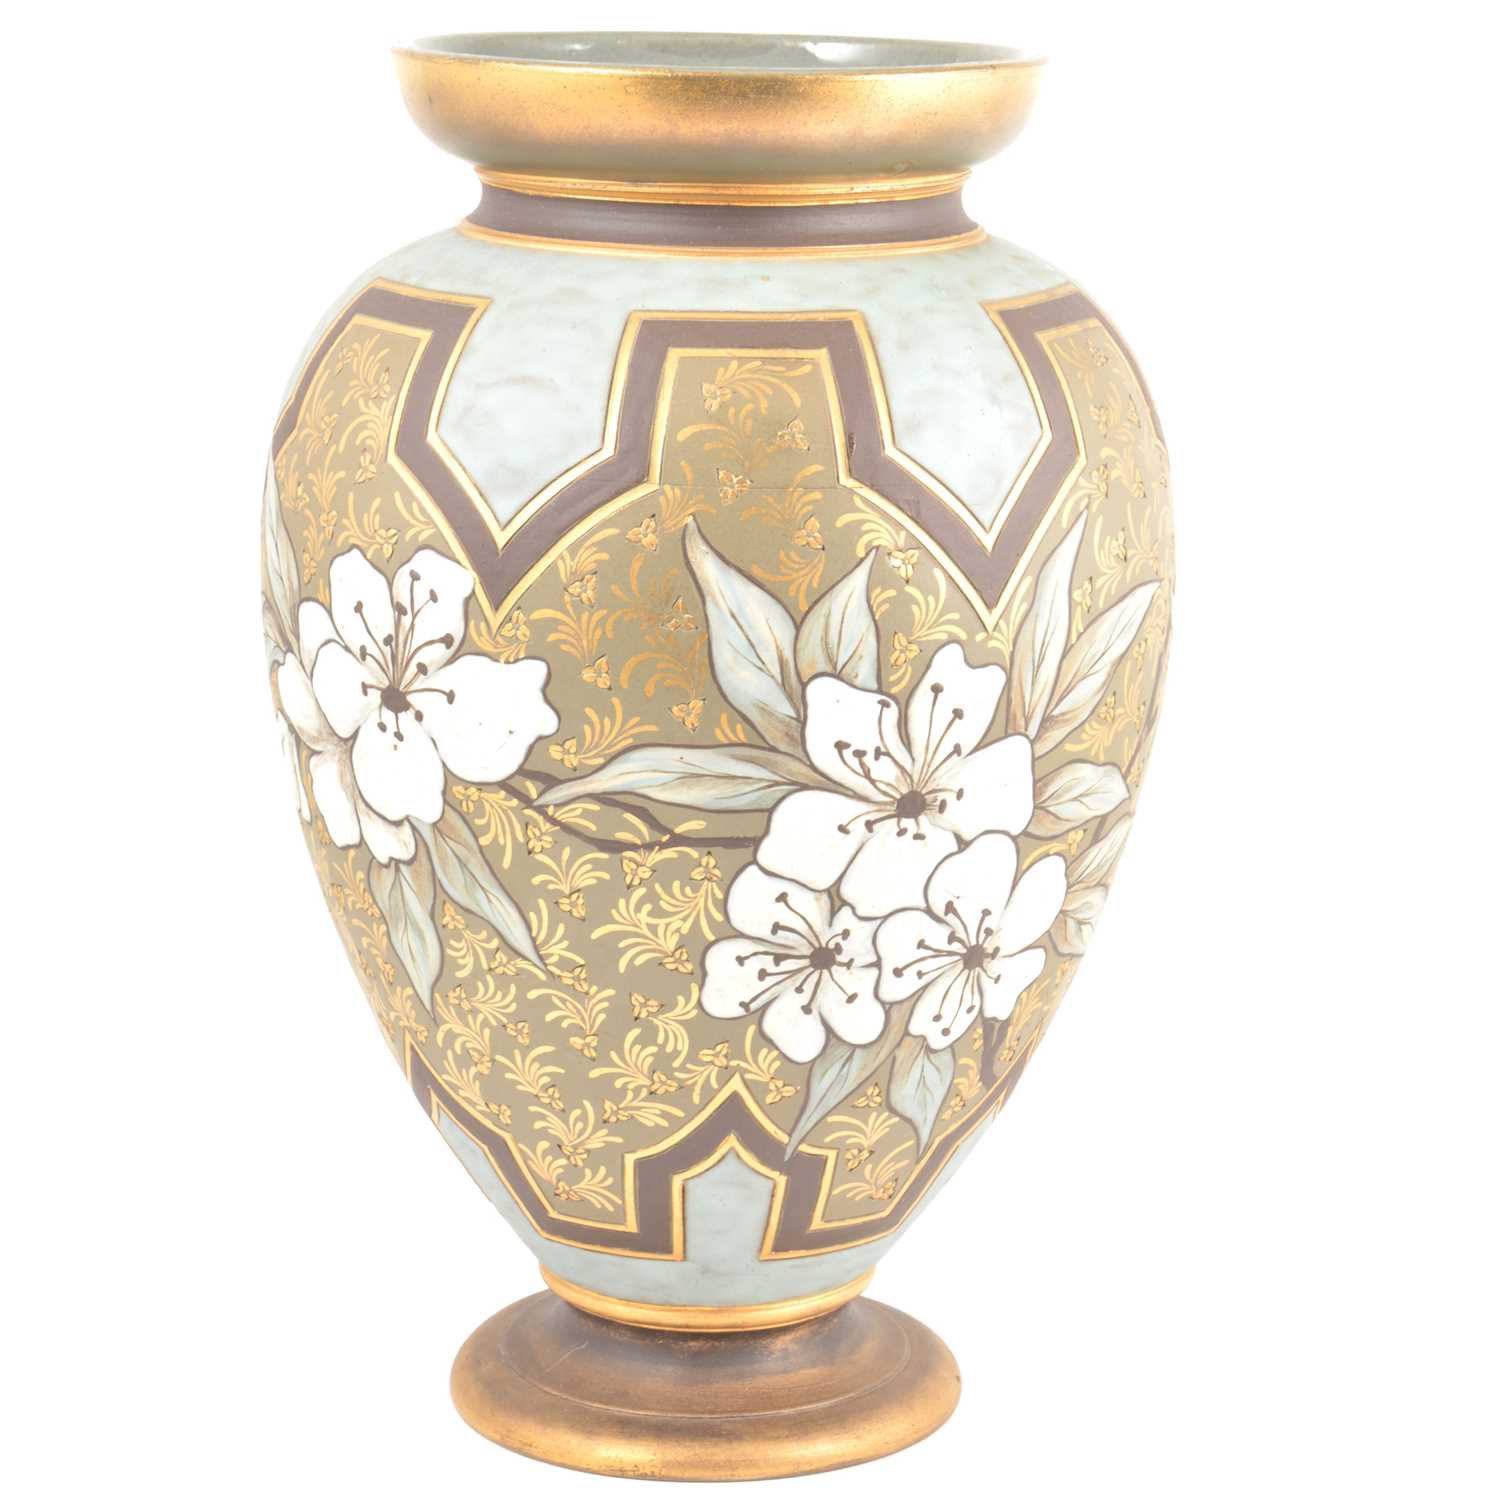 Lot 14 - Large Doulton Silicon vase by Eliza Simmance